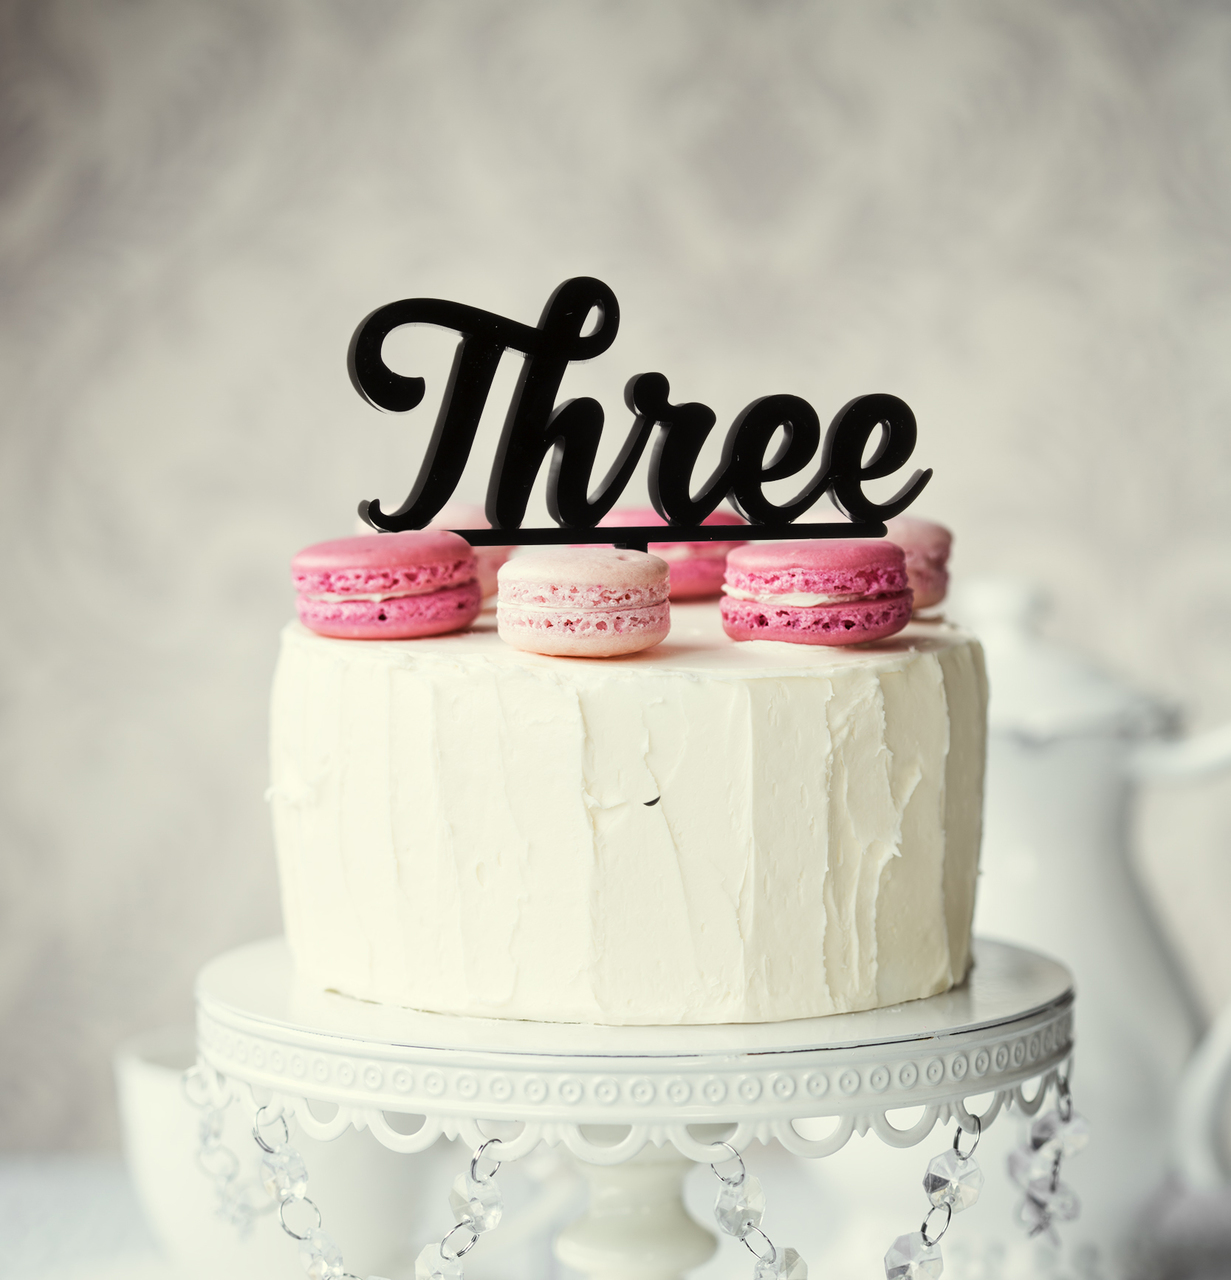 Number THREE Cake Topper (Black)